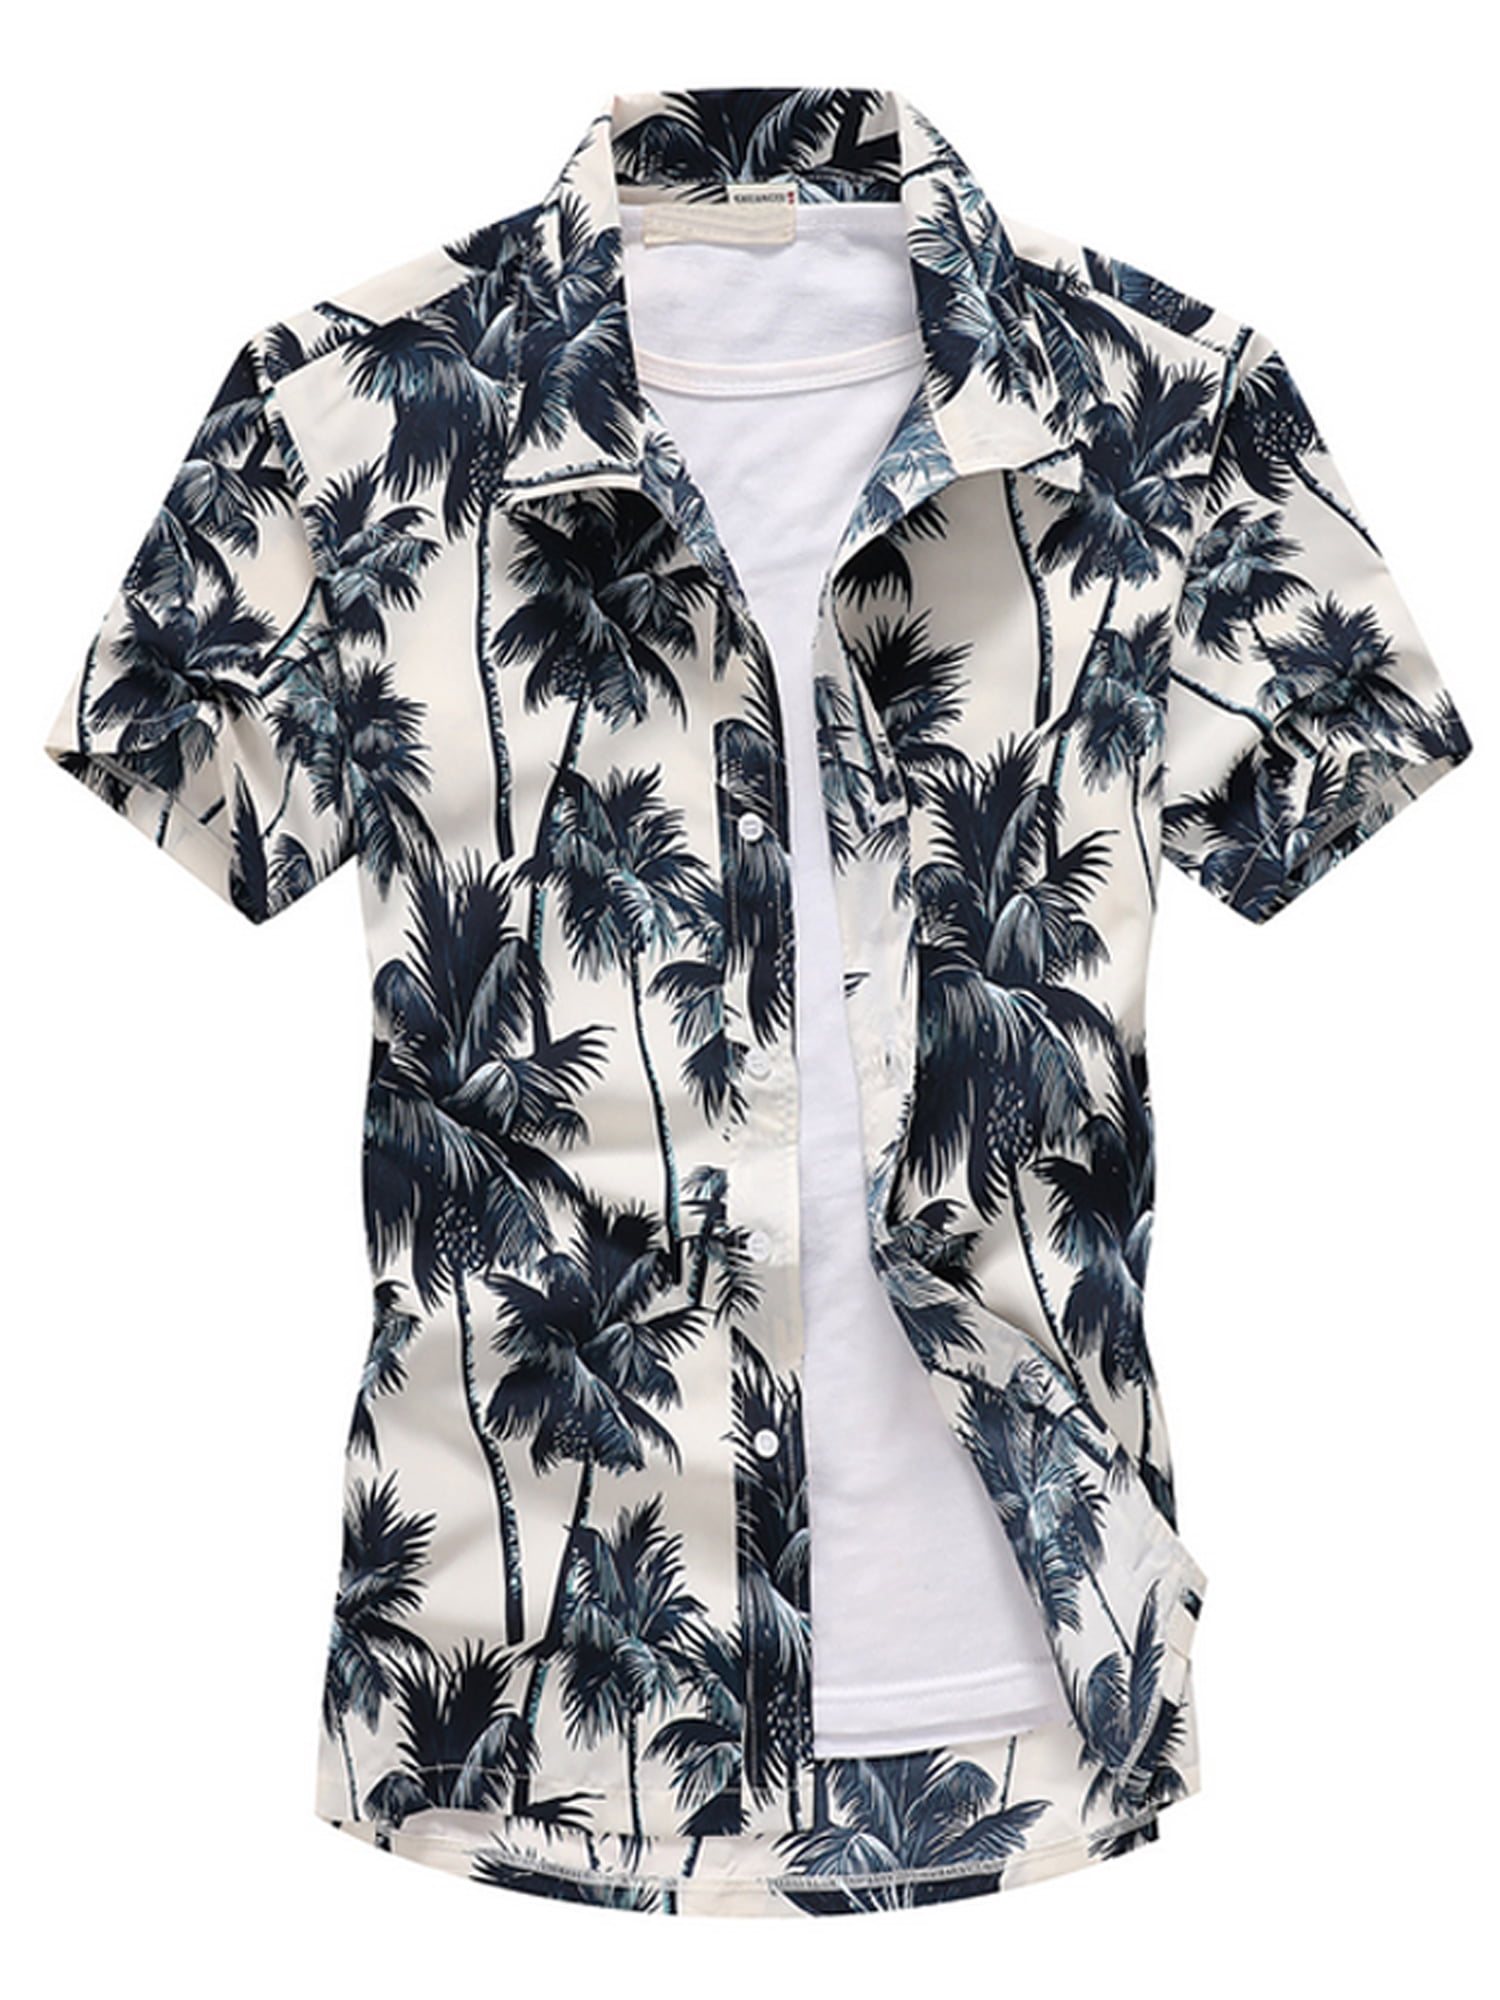 Mens Hawaii Floral T Shirt Palm Tree Print Short Sleeved Beach Summer Casual Top 